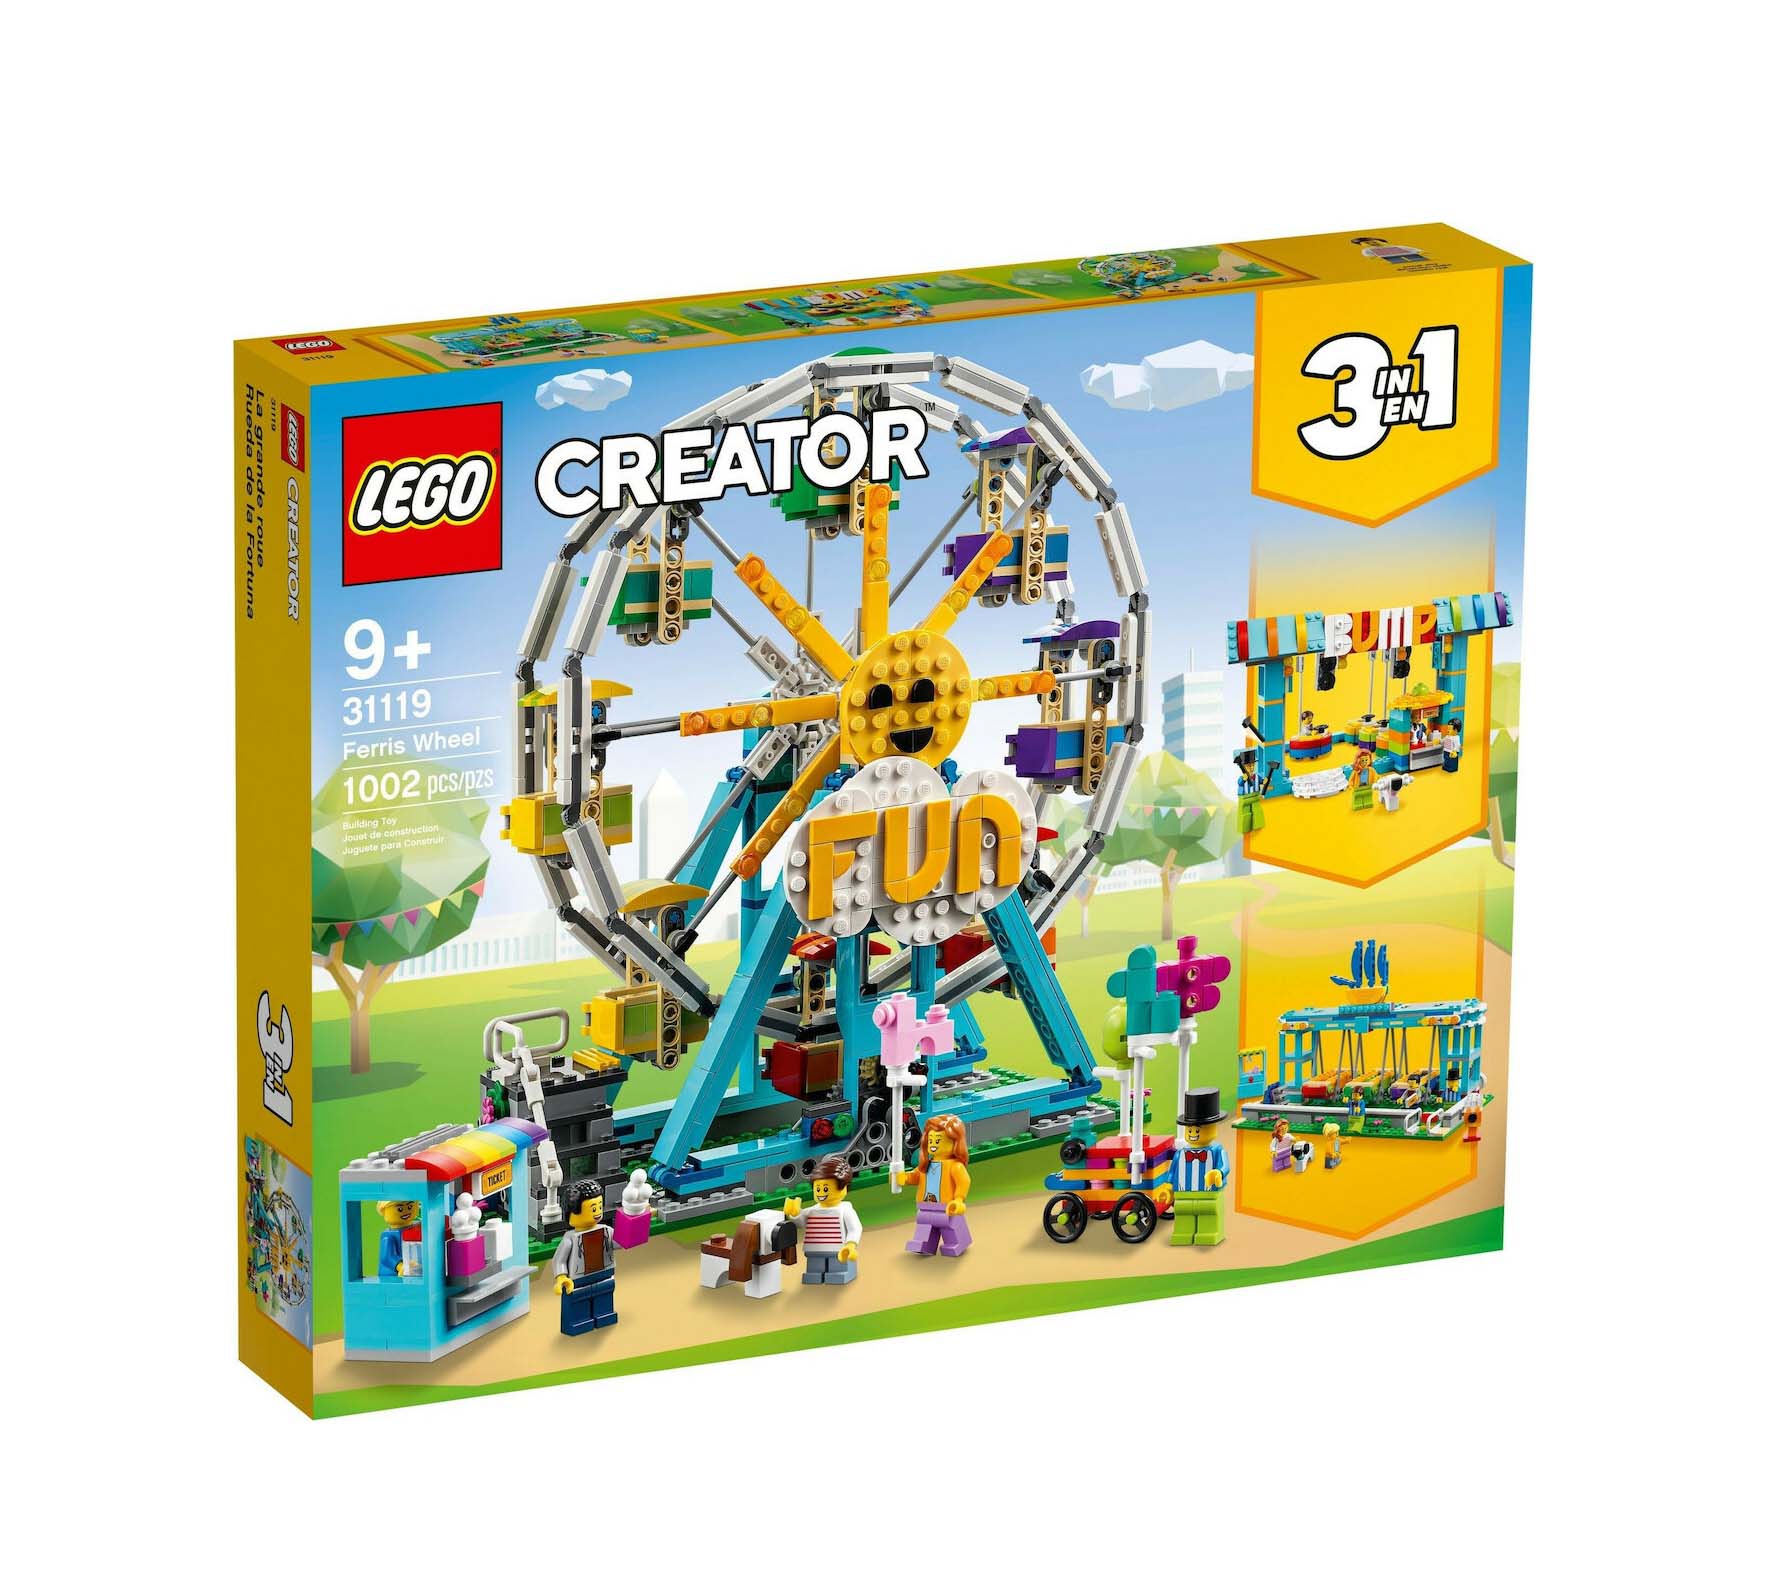 Lego Creator 3-in-1: Ferris Wheel 31119